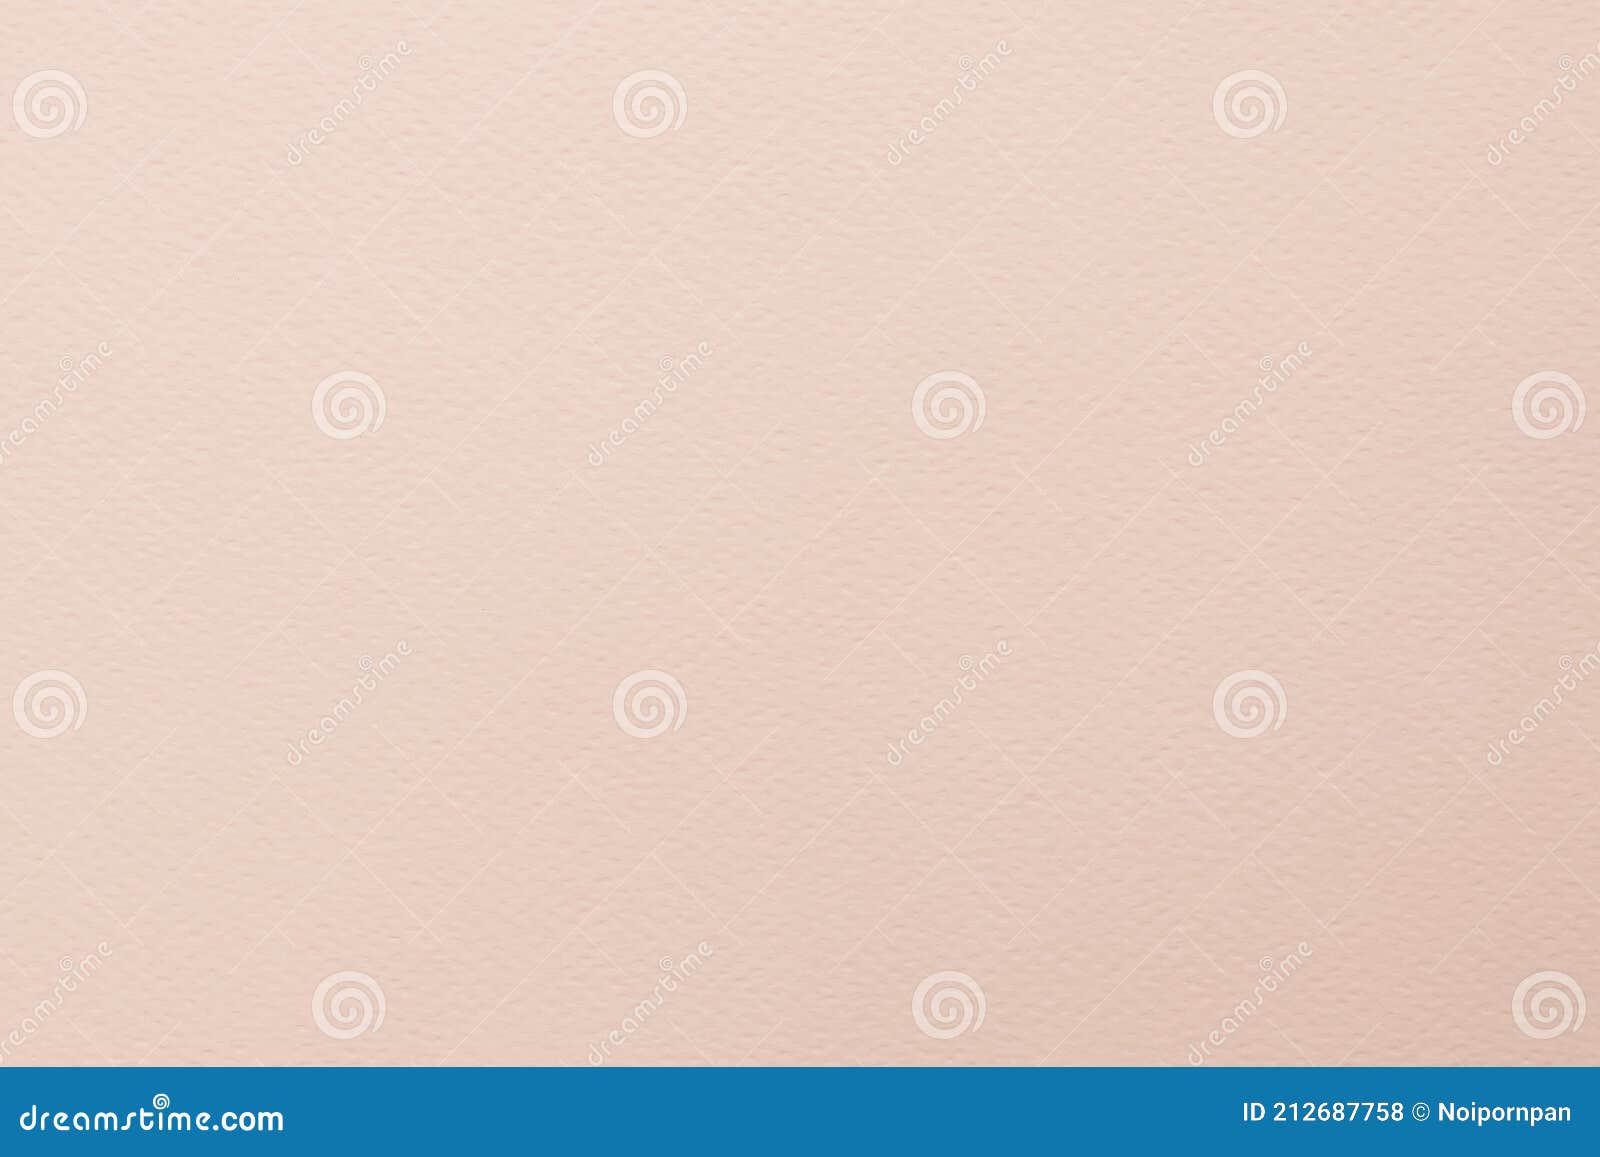 Pastel Beige Orange Cream Tone Water Color Paper Texture Background Stock  Photo - Image of plain, aged: 212687758